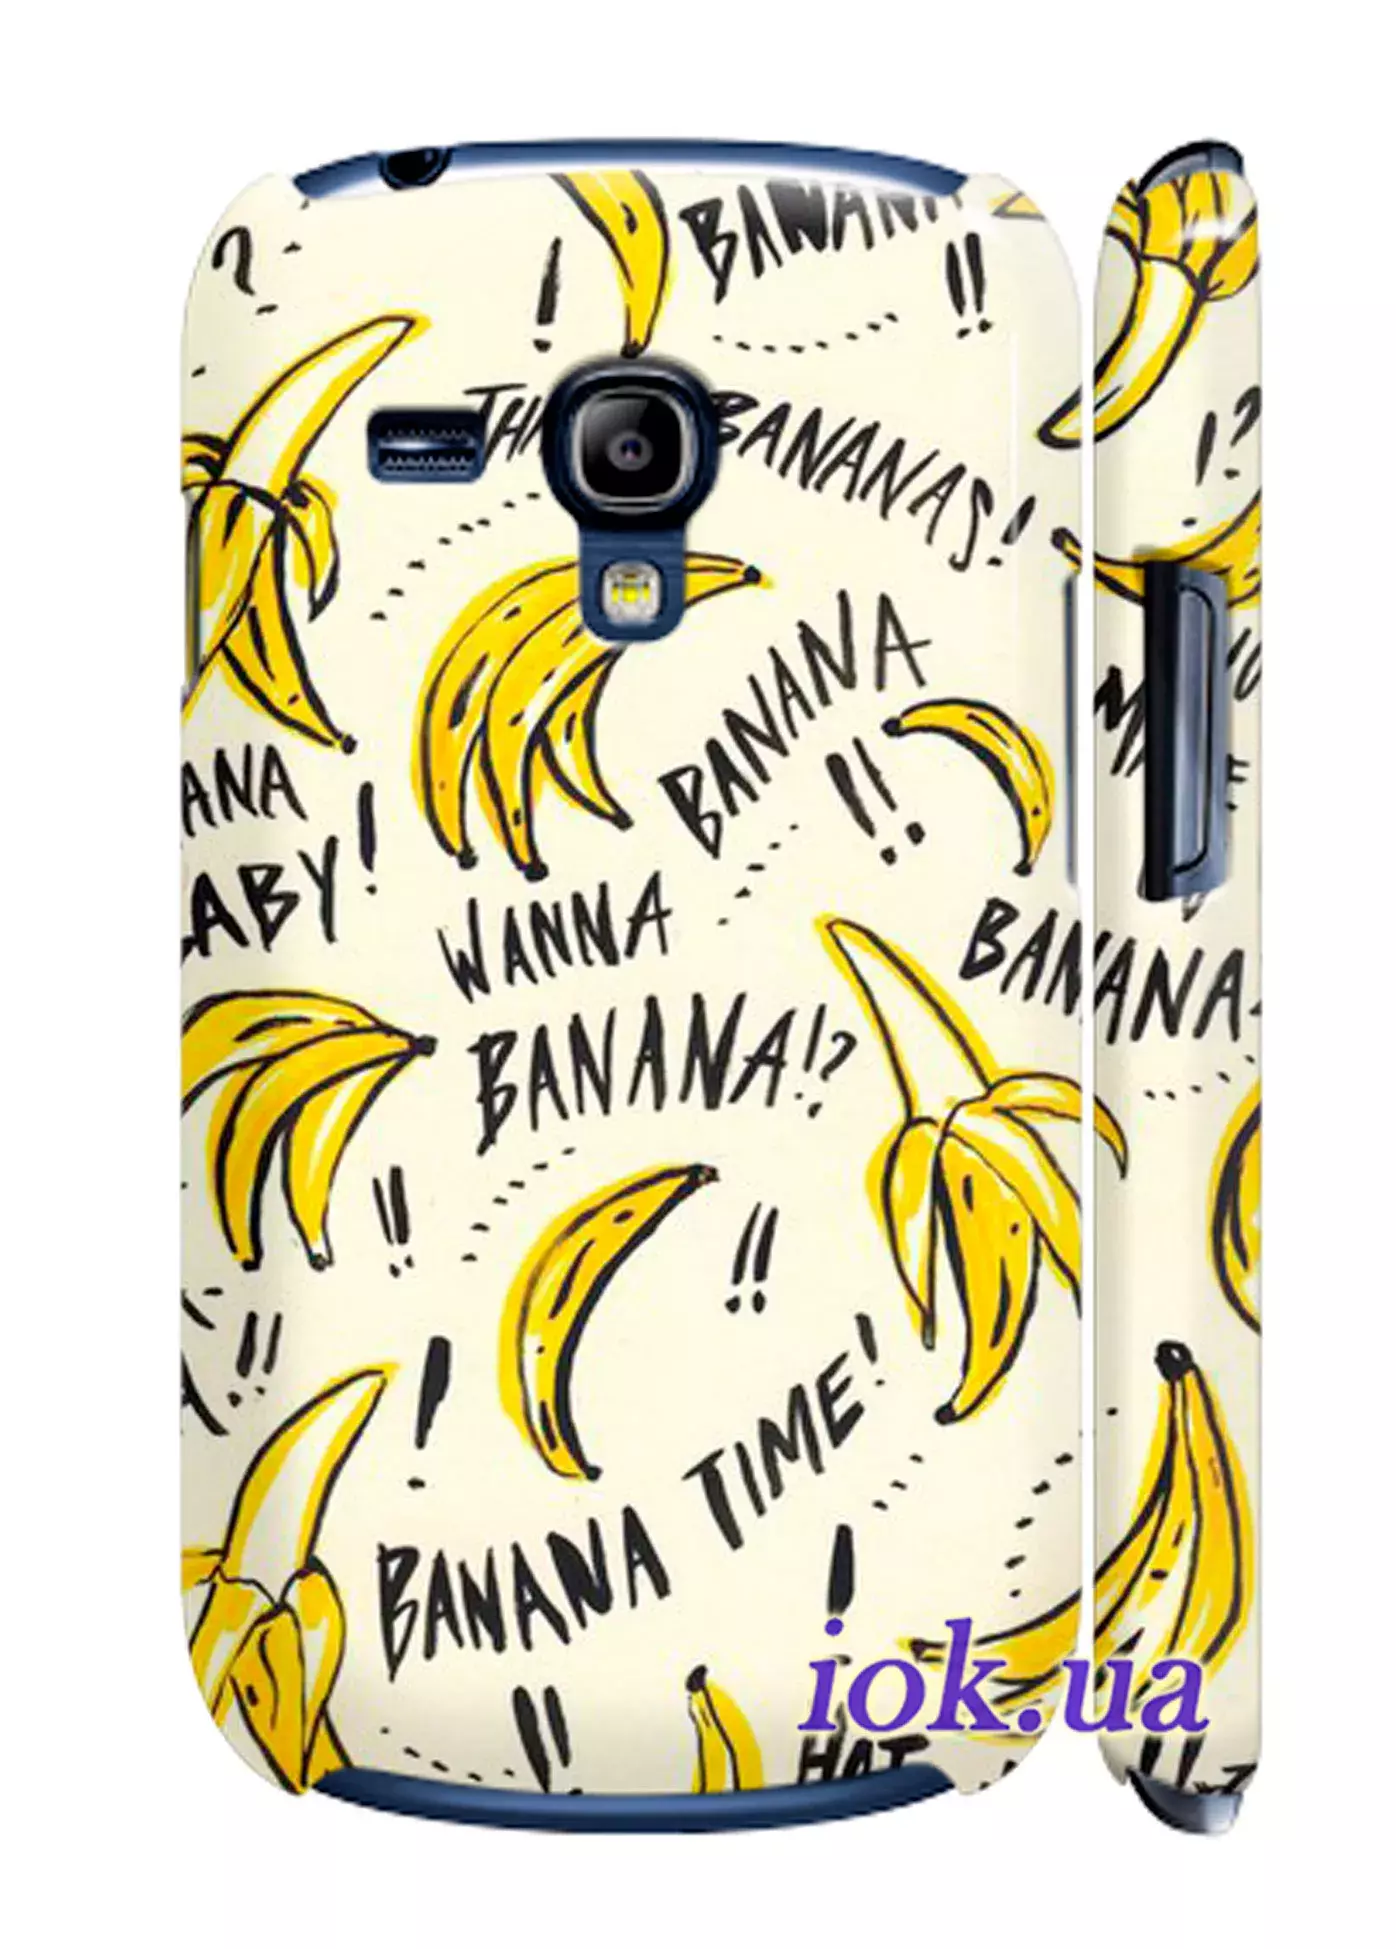 Чехол для Galaxy S3 Mini - Бананы